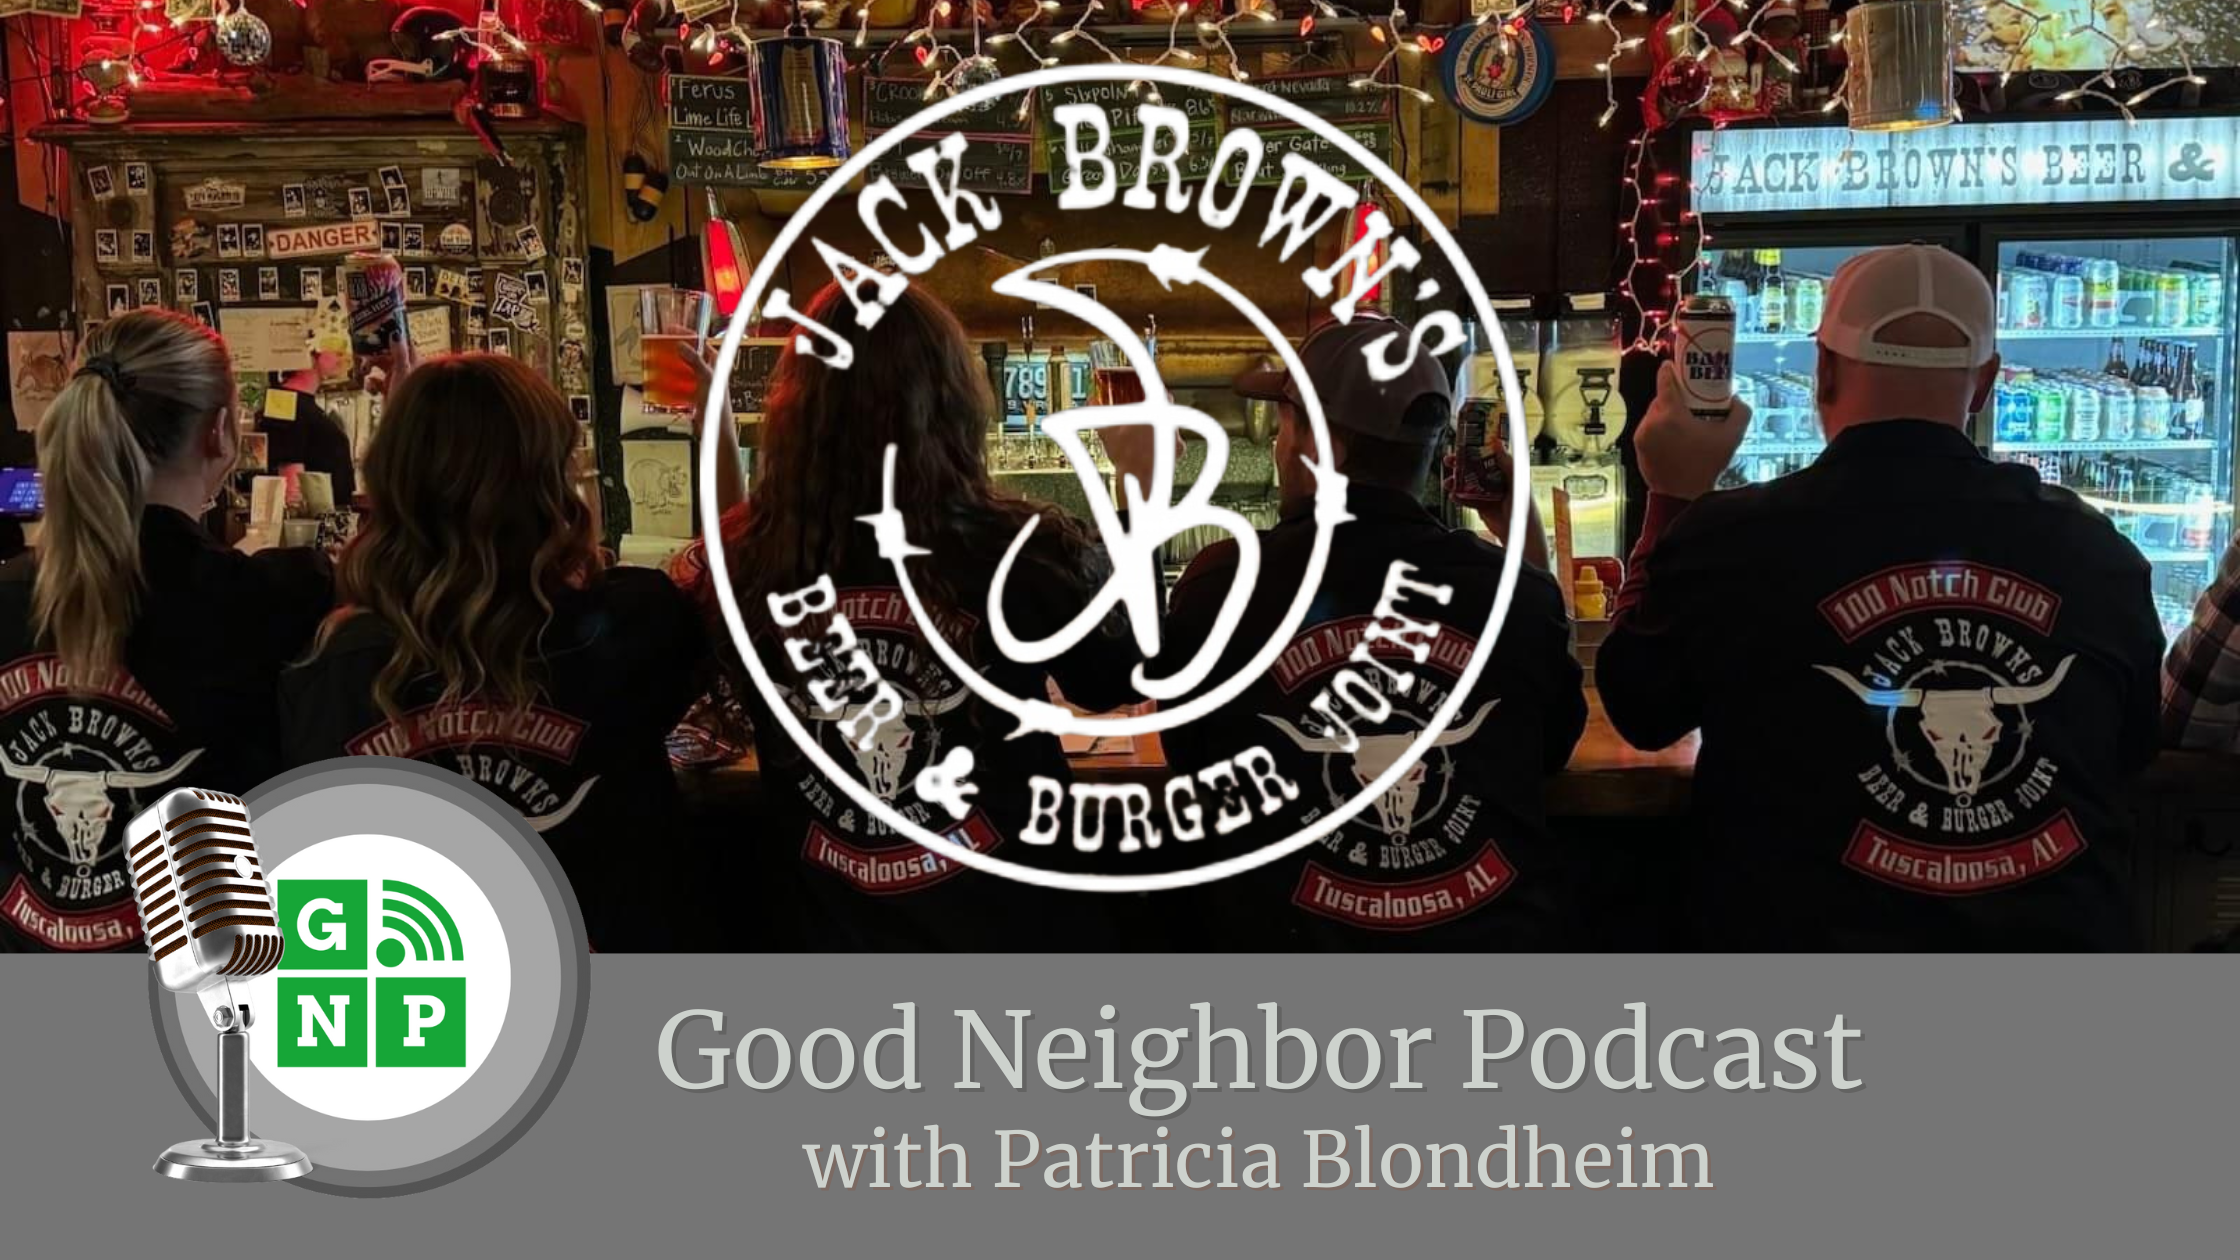 Jack Brown's Beer and Burger Joint: Ashlei Schwartz's Blend of Beer, Burgers, and Belonging